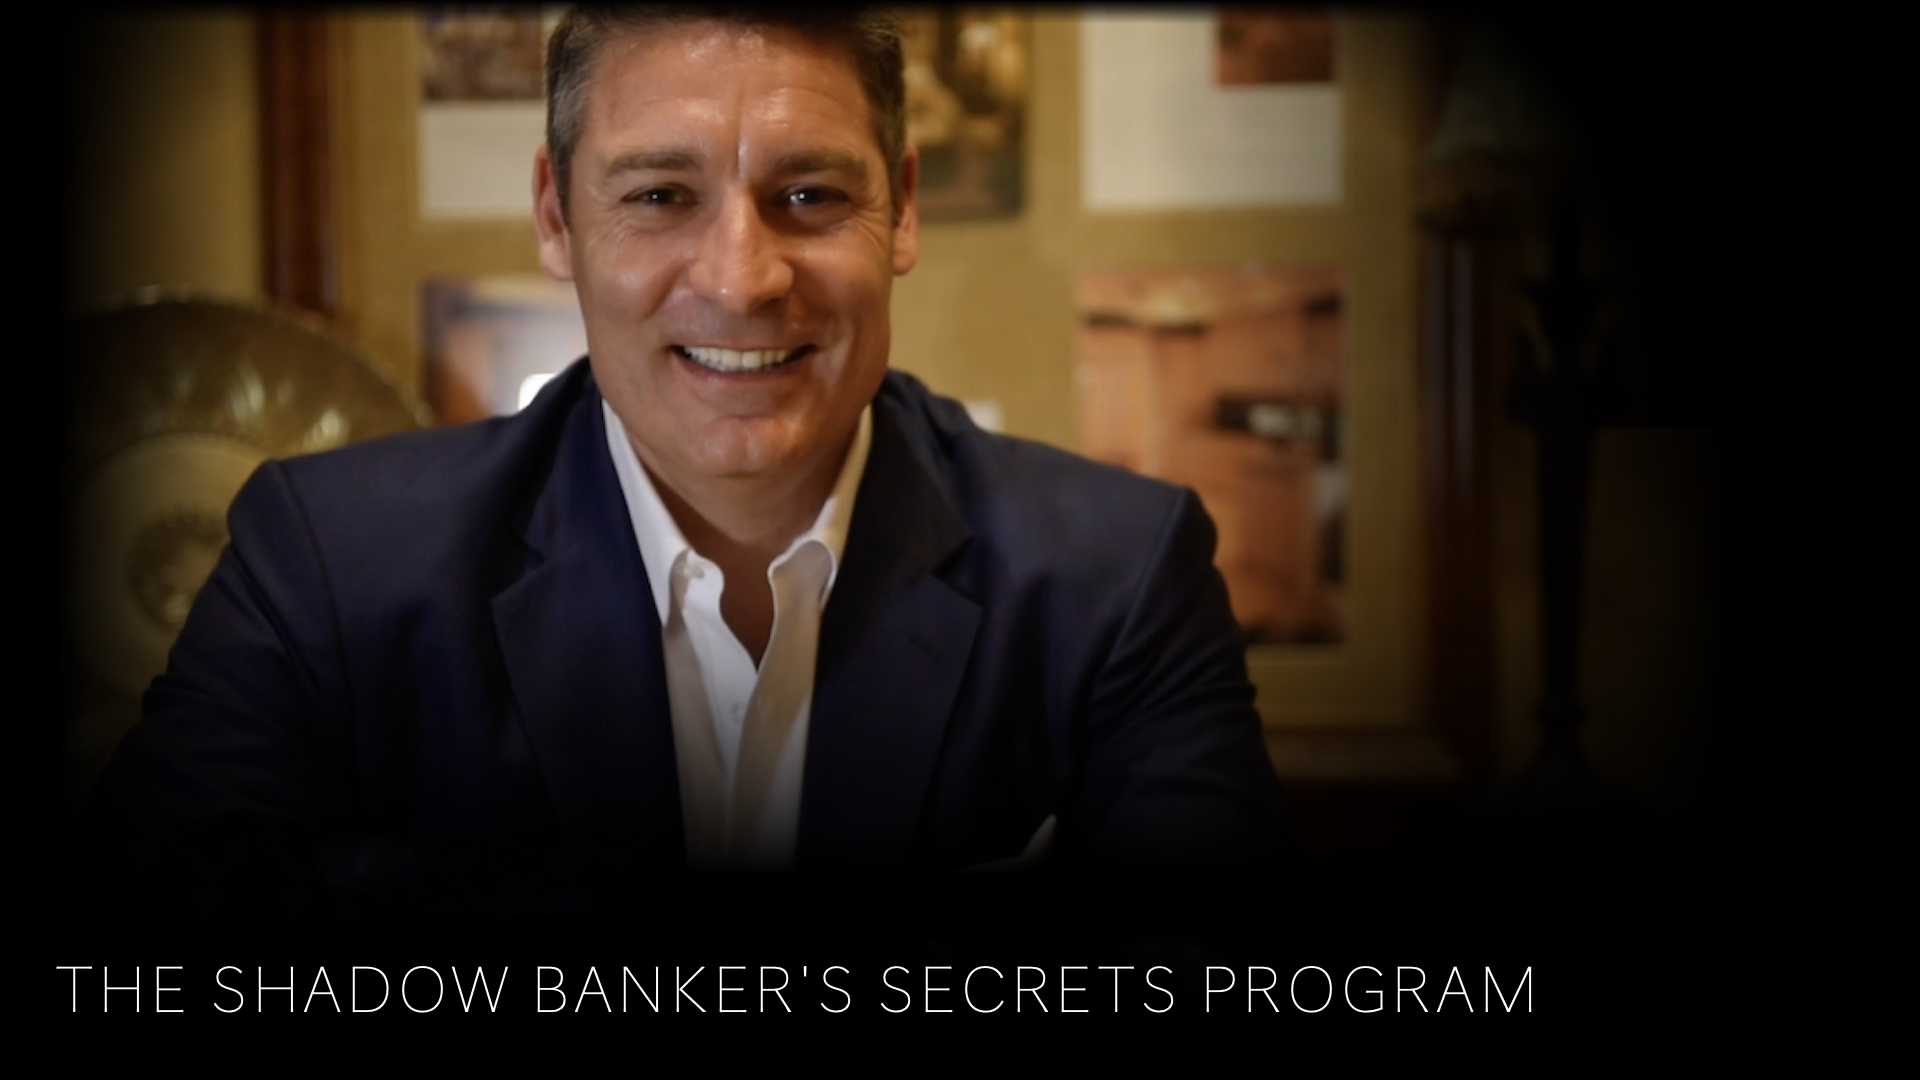 The Shadow Banker's Secrets Program